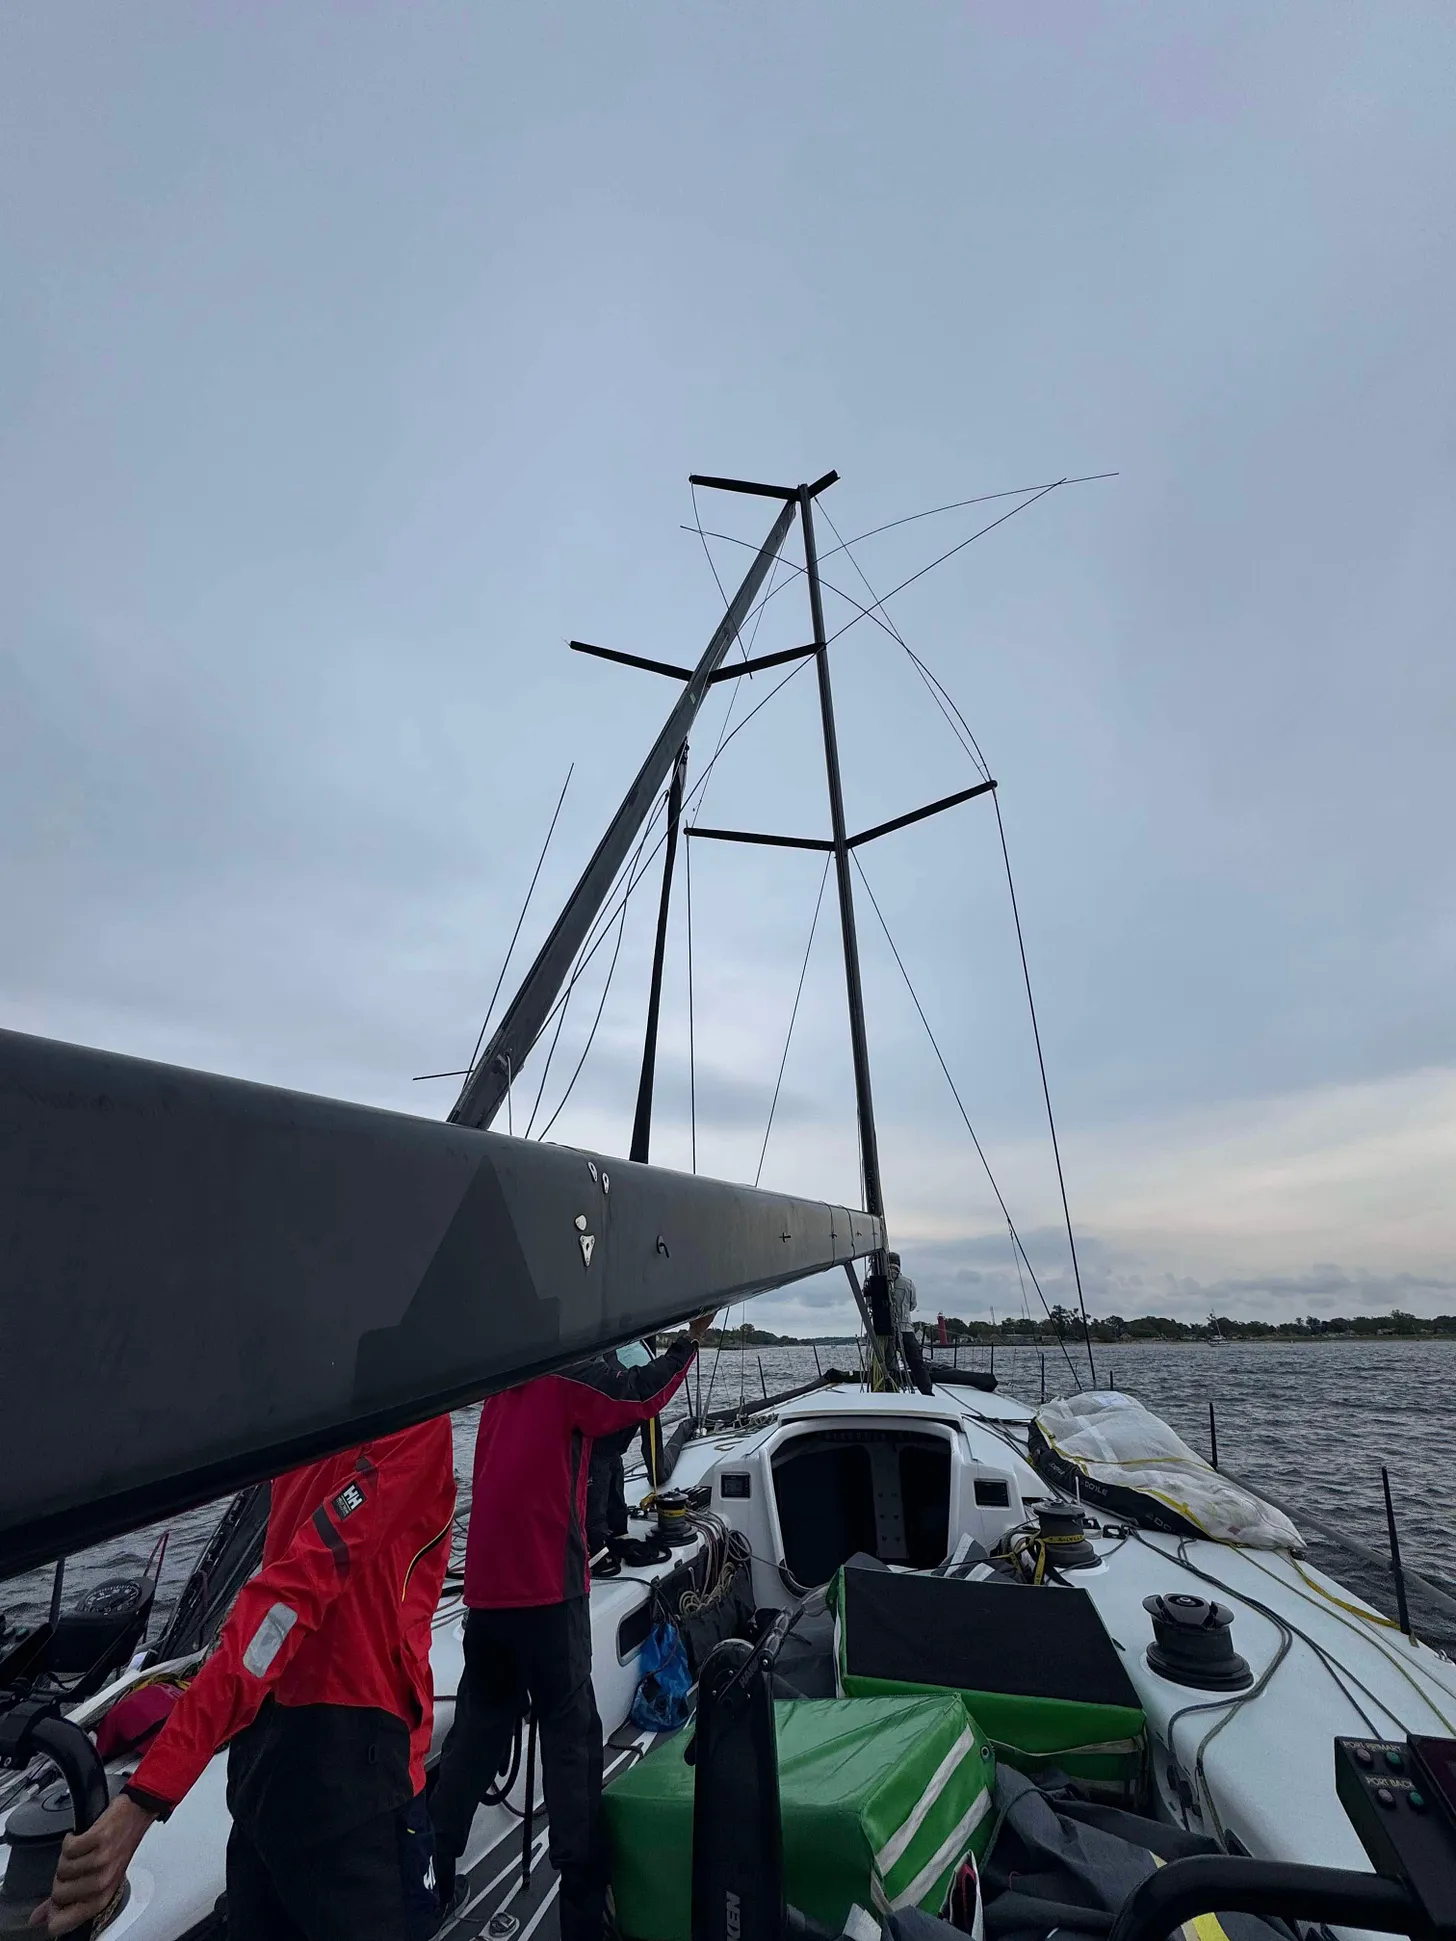 Chicago to Mackinac sailboat race: Storm snaps masts, tosses sailor into Lake Michigan